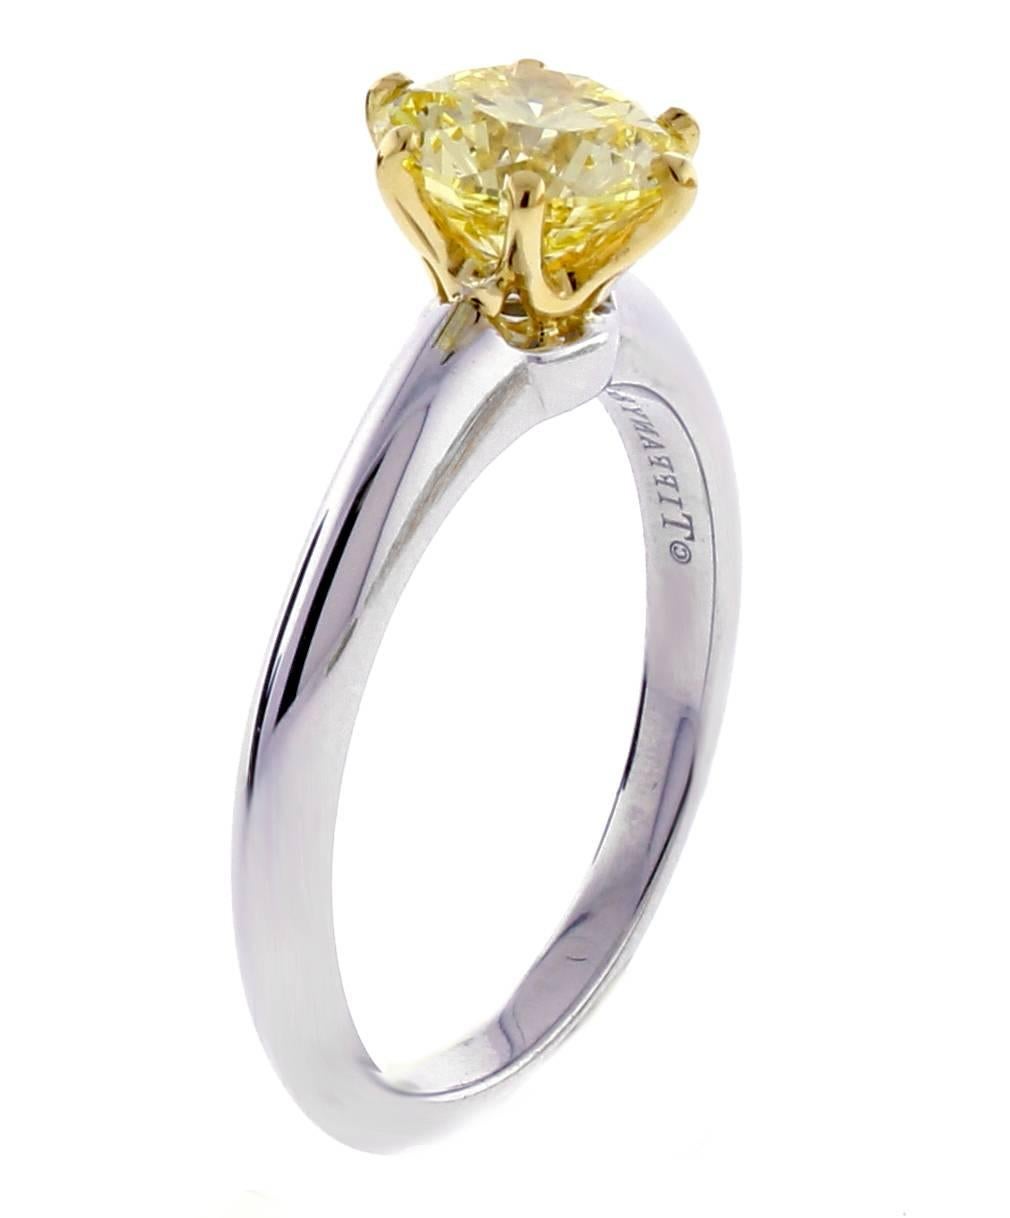 Round Cut Tiffany & Co. 1.44 Carat Yellow Diamond Engagement Ring